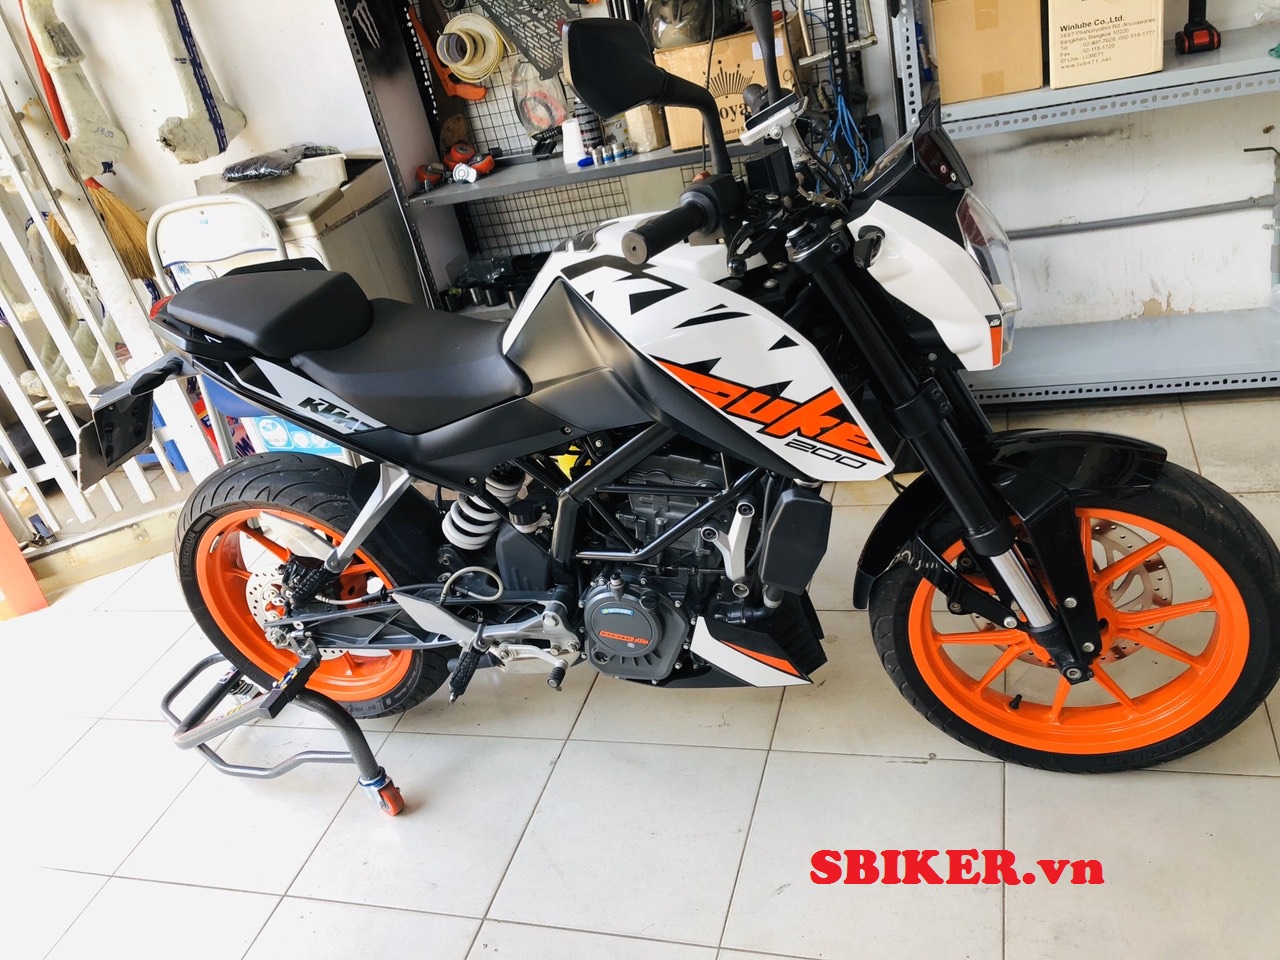 KTM 890 Duke R  nakedbike nhập Philippines giá 519 triệu đồng  VnExpress